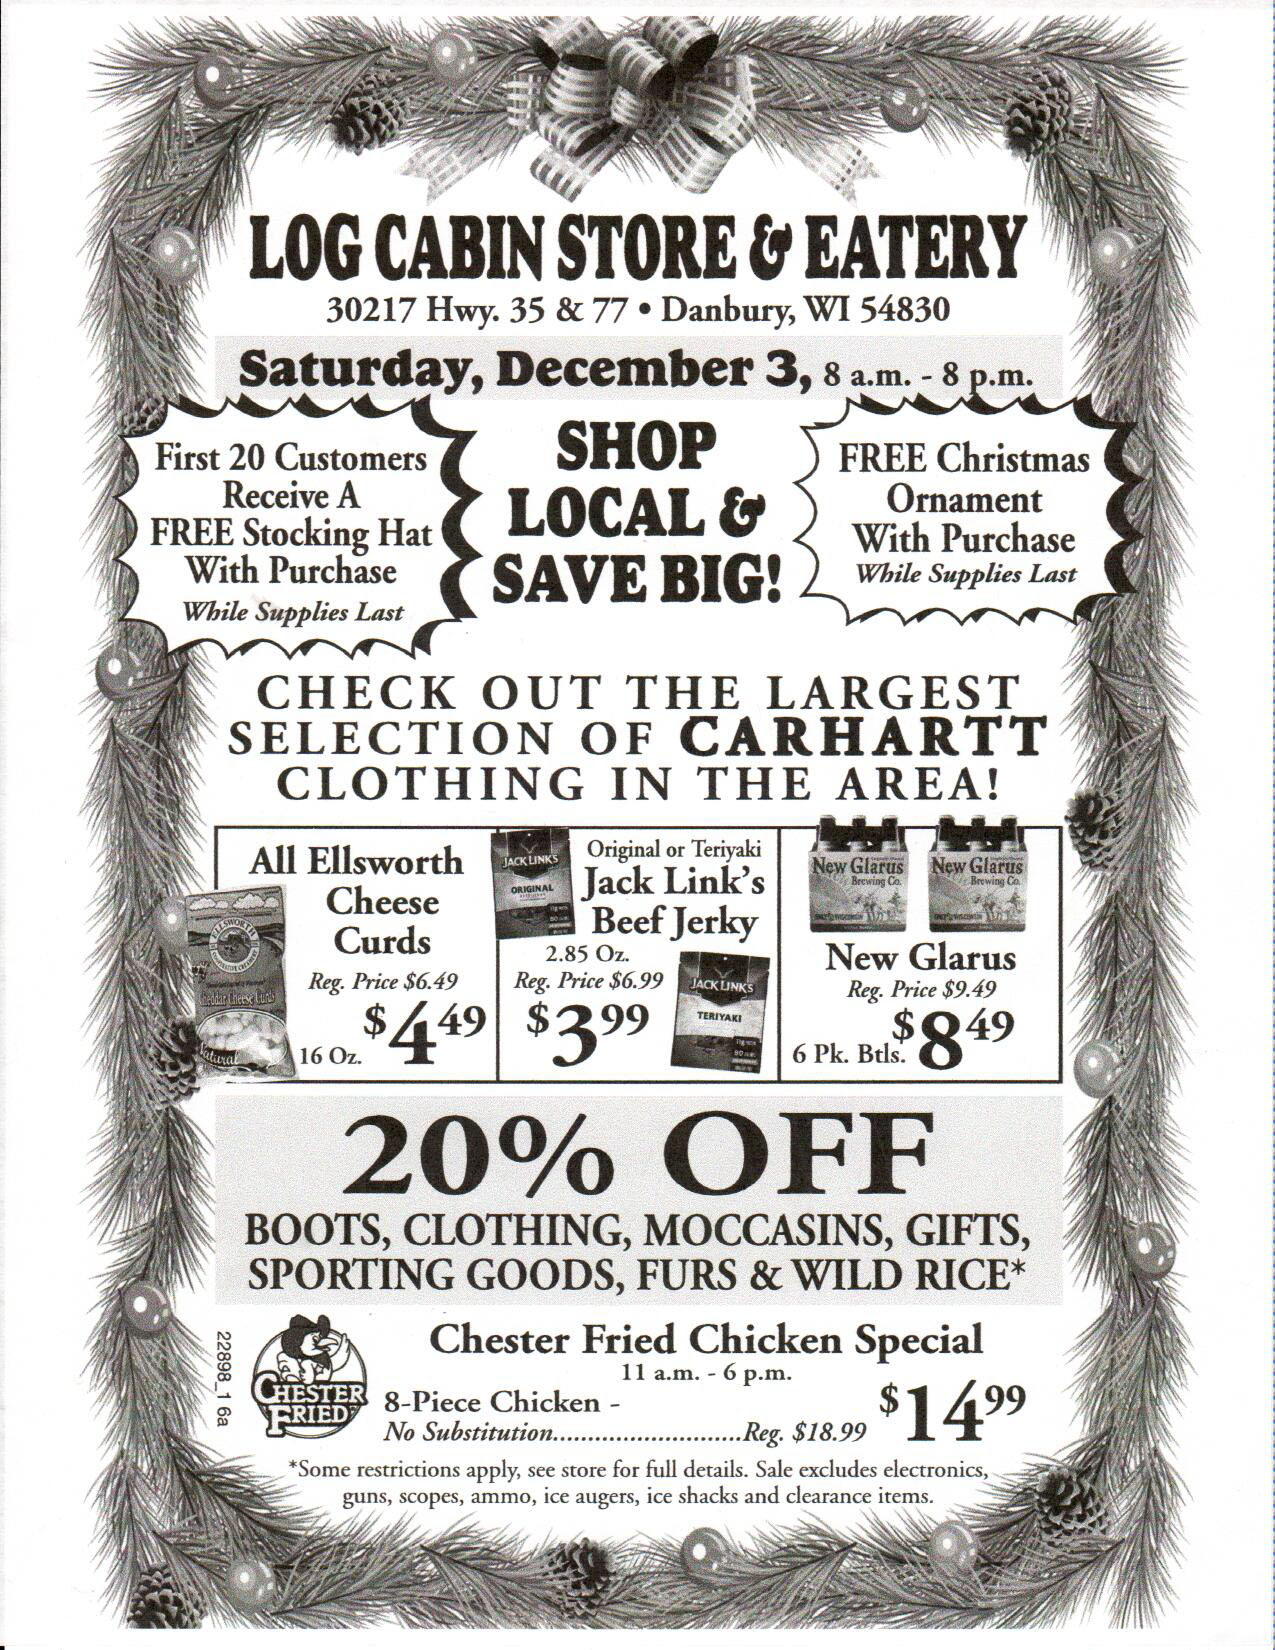 Log Cabin Store & Eatery, Danbury, WI